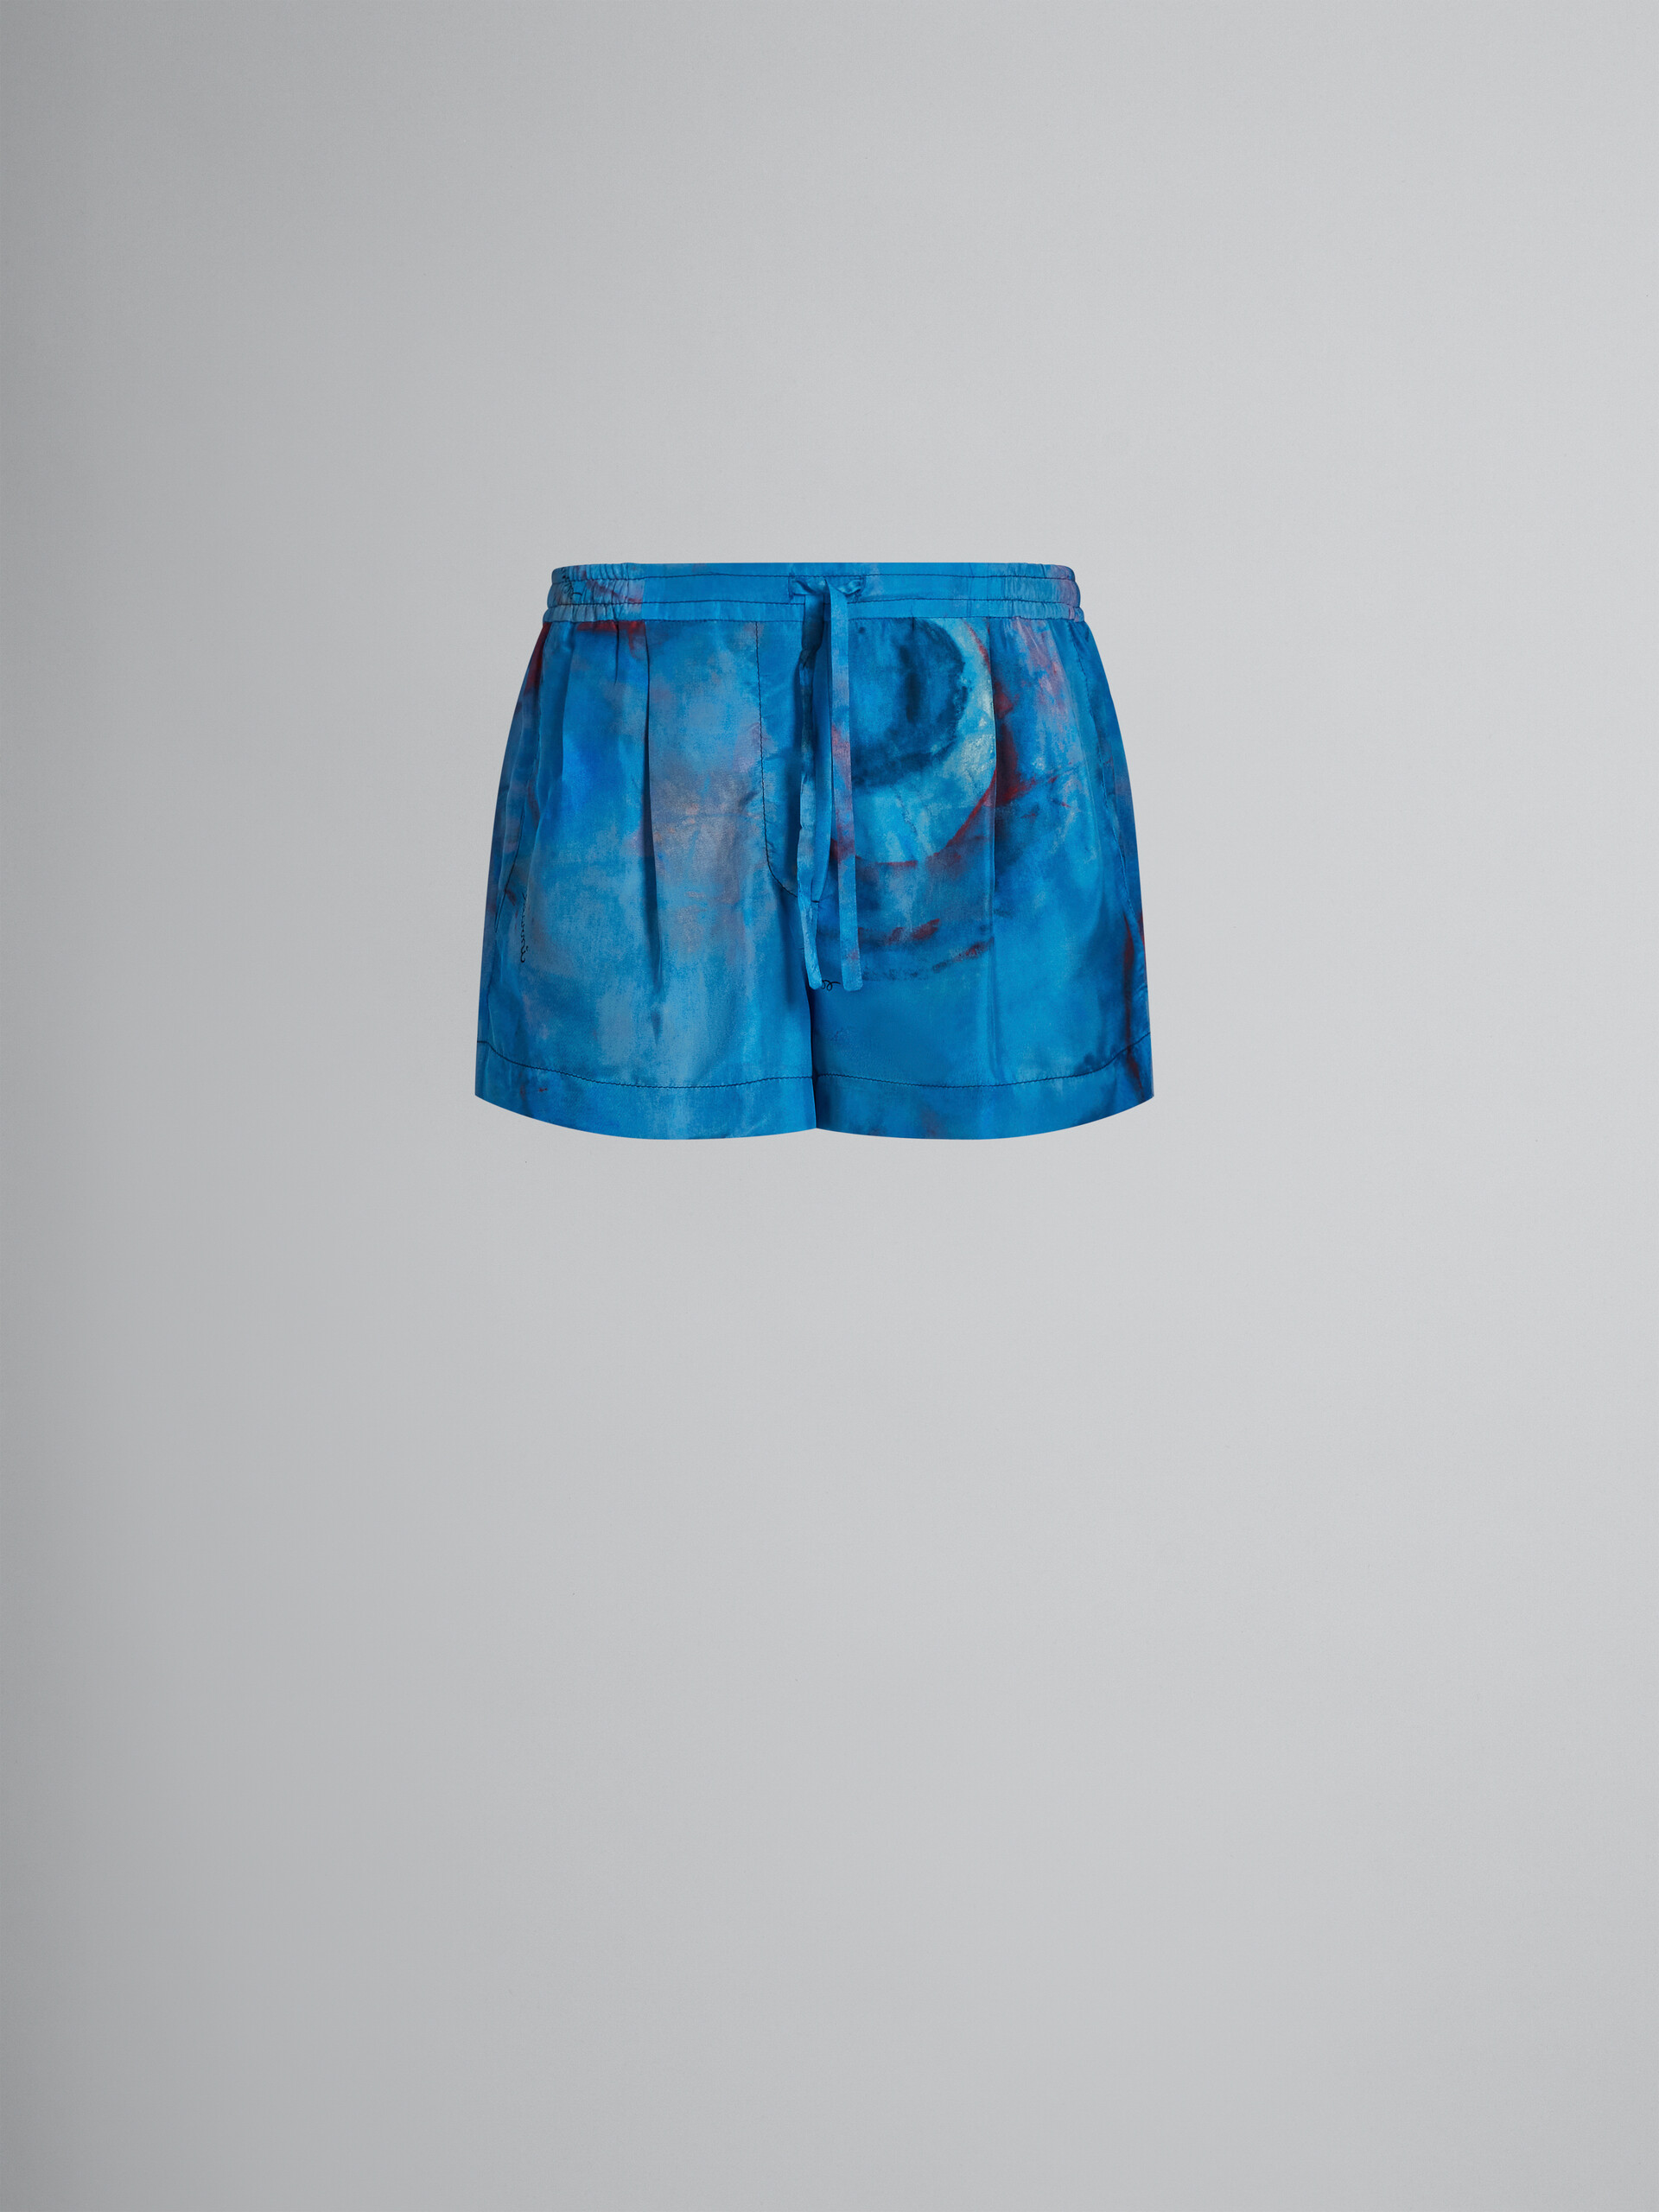 Elasticated silk shorts with Buchi Blu print - Pants - Image 1